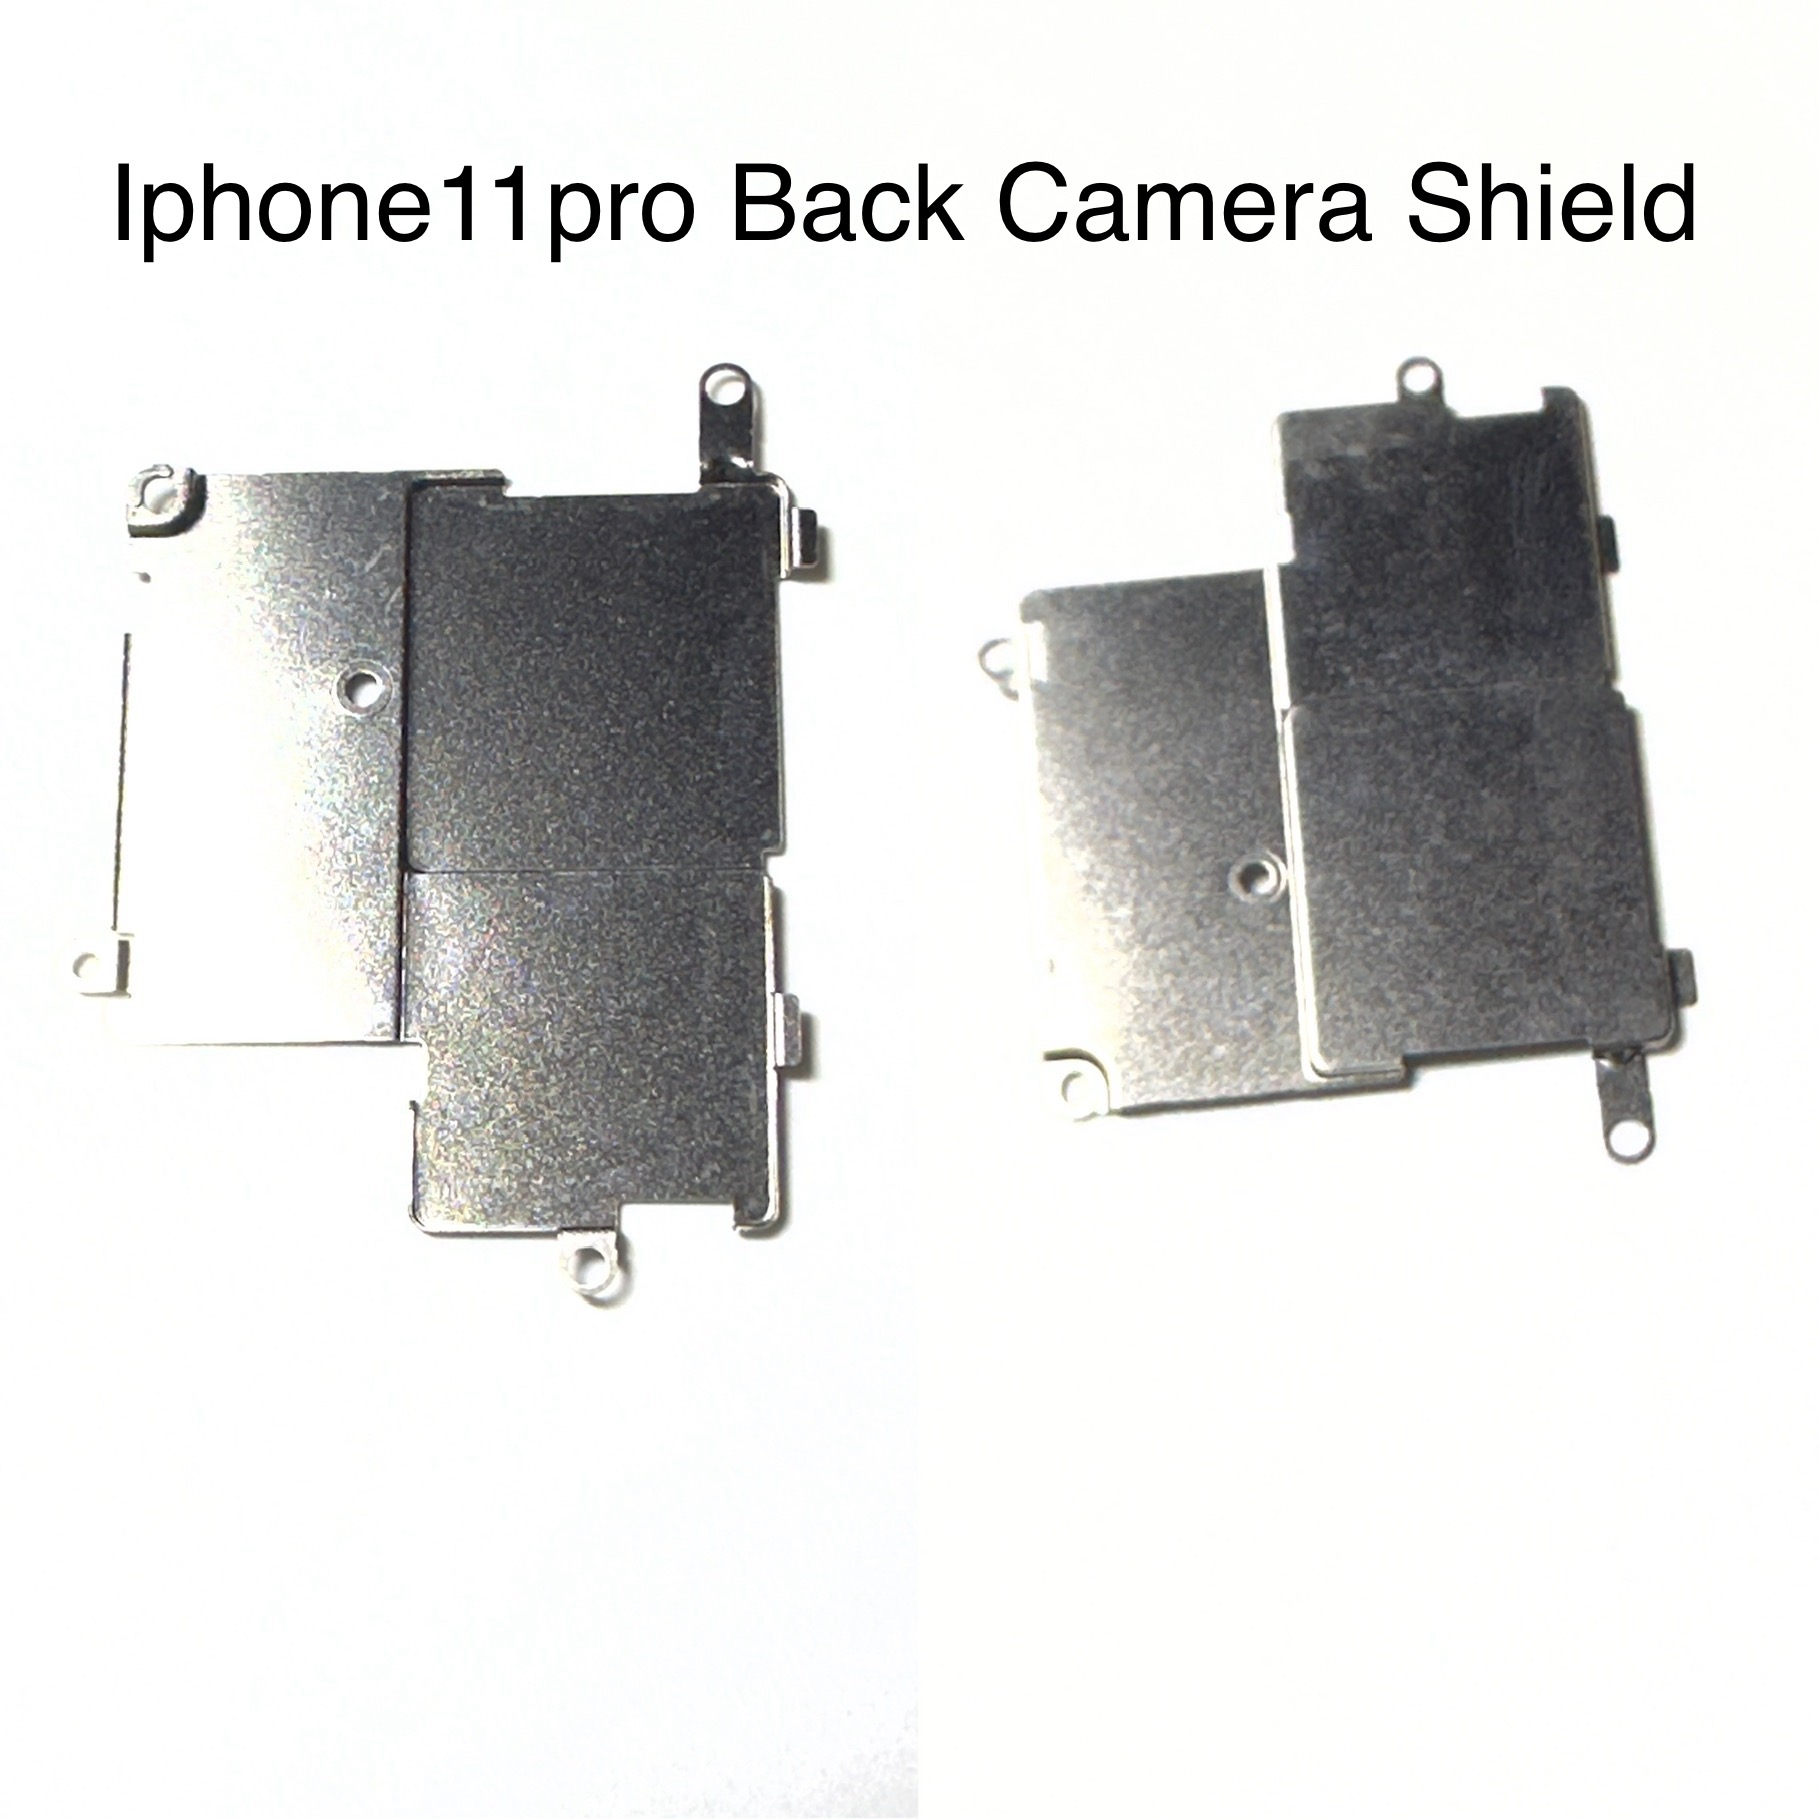 iphone11pro back camera shield